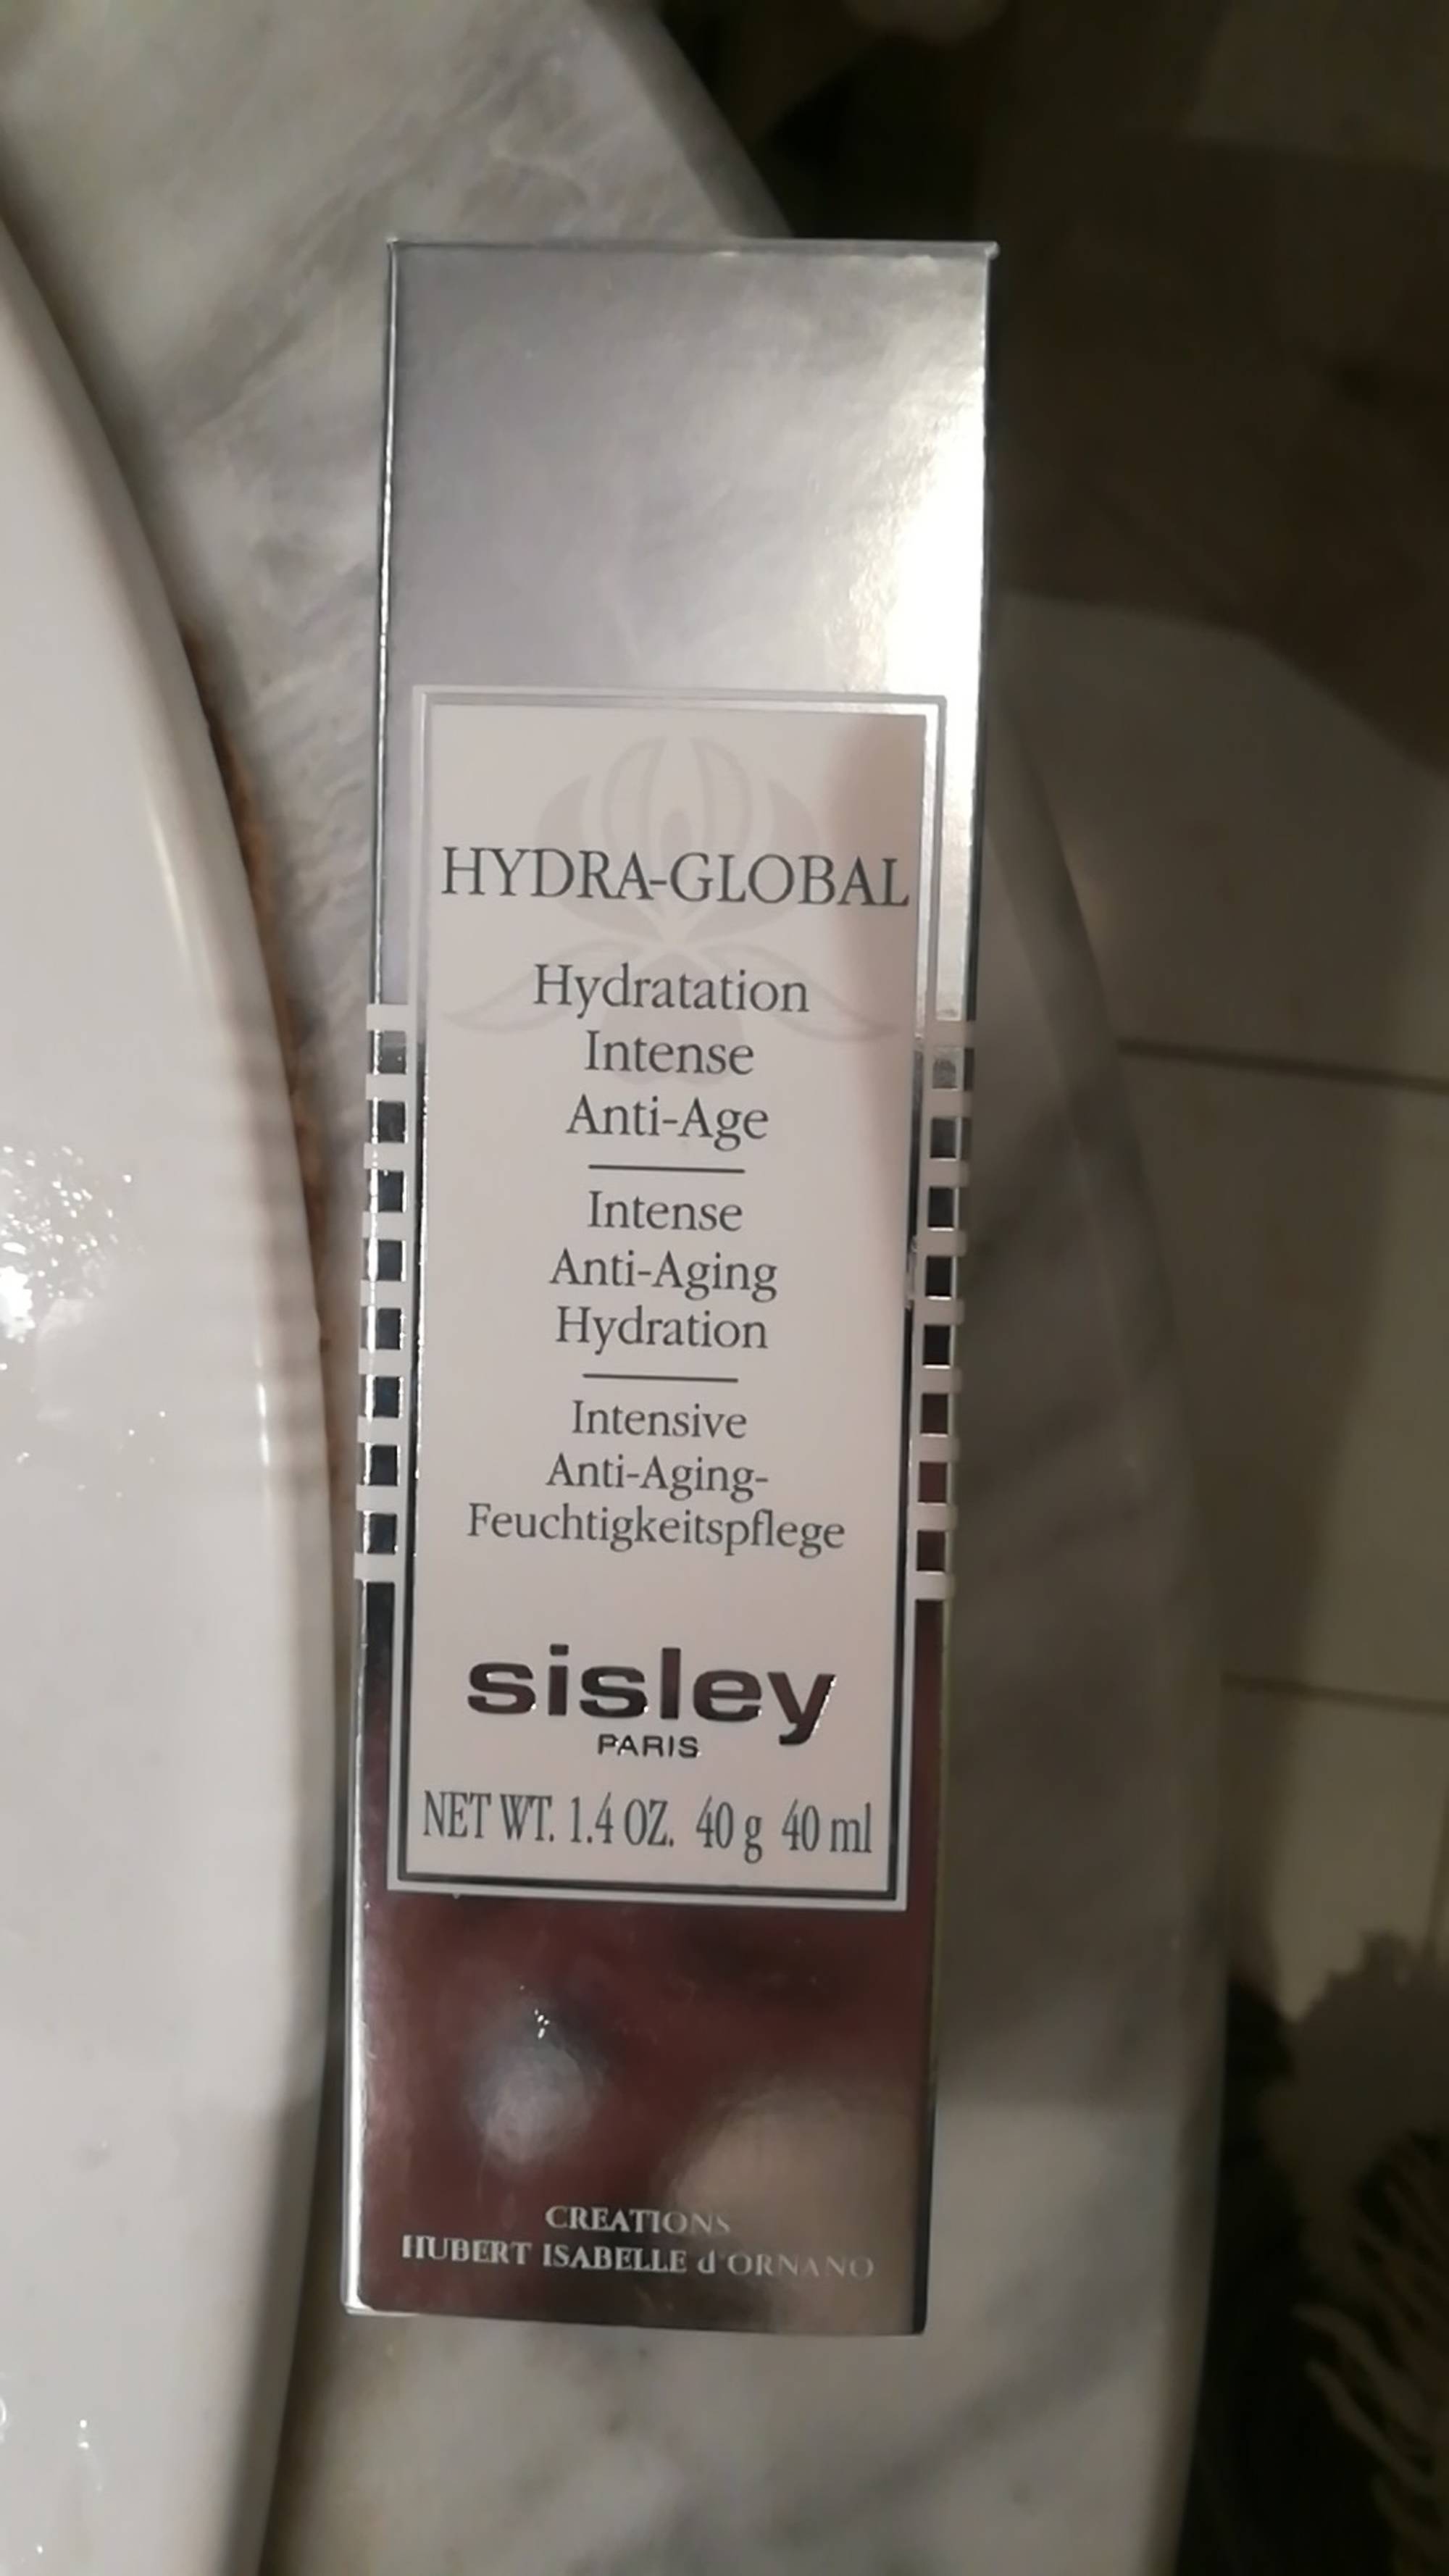 SISLEY - Hydra-global - Hydratation intense anti-age